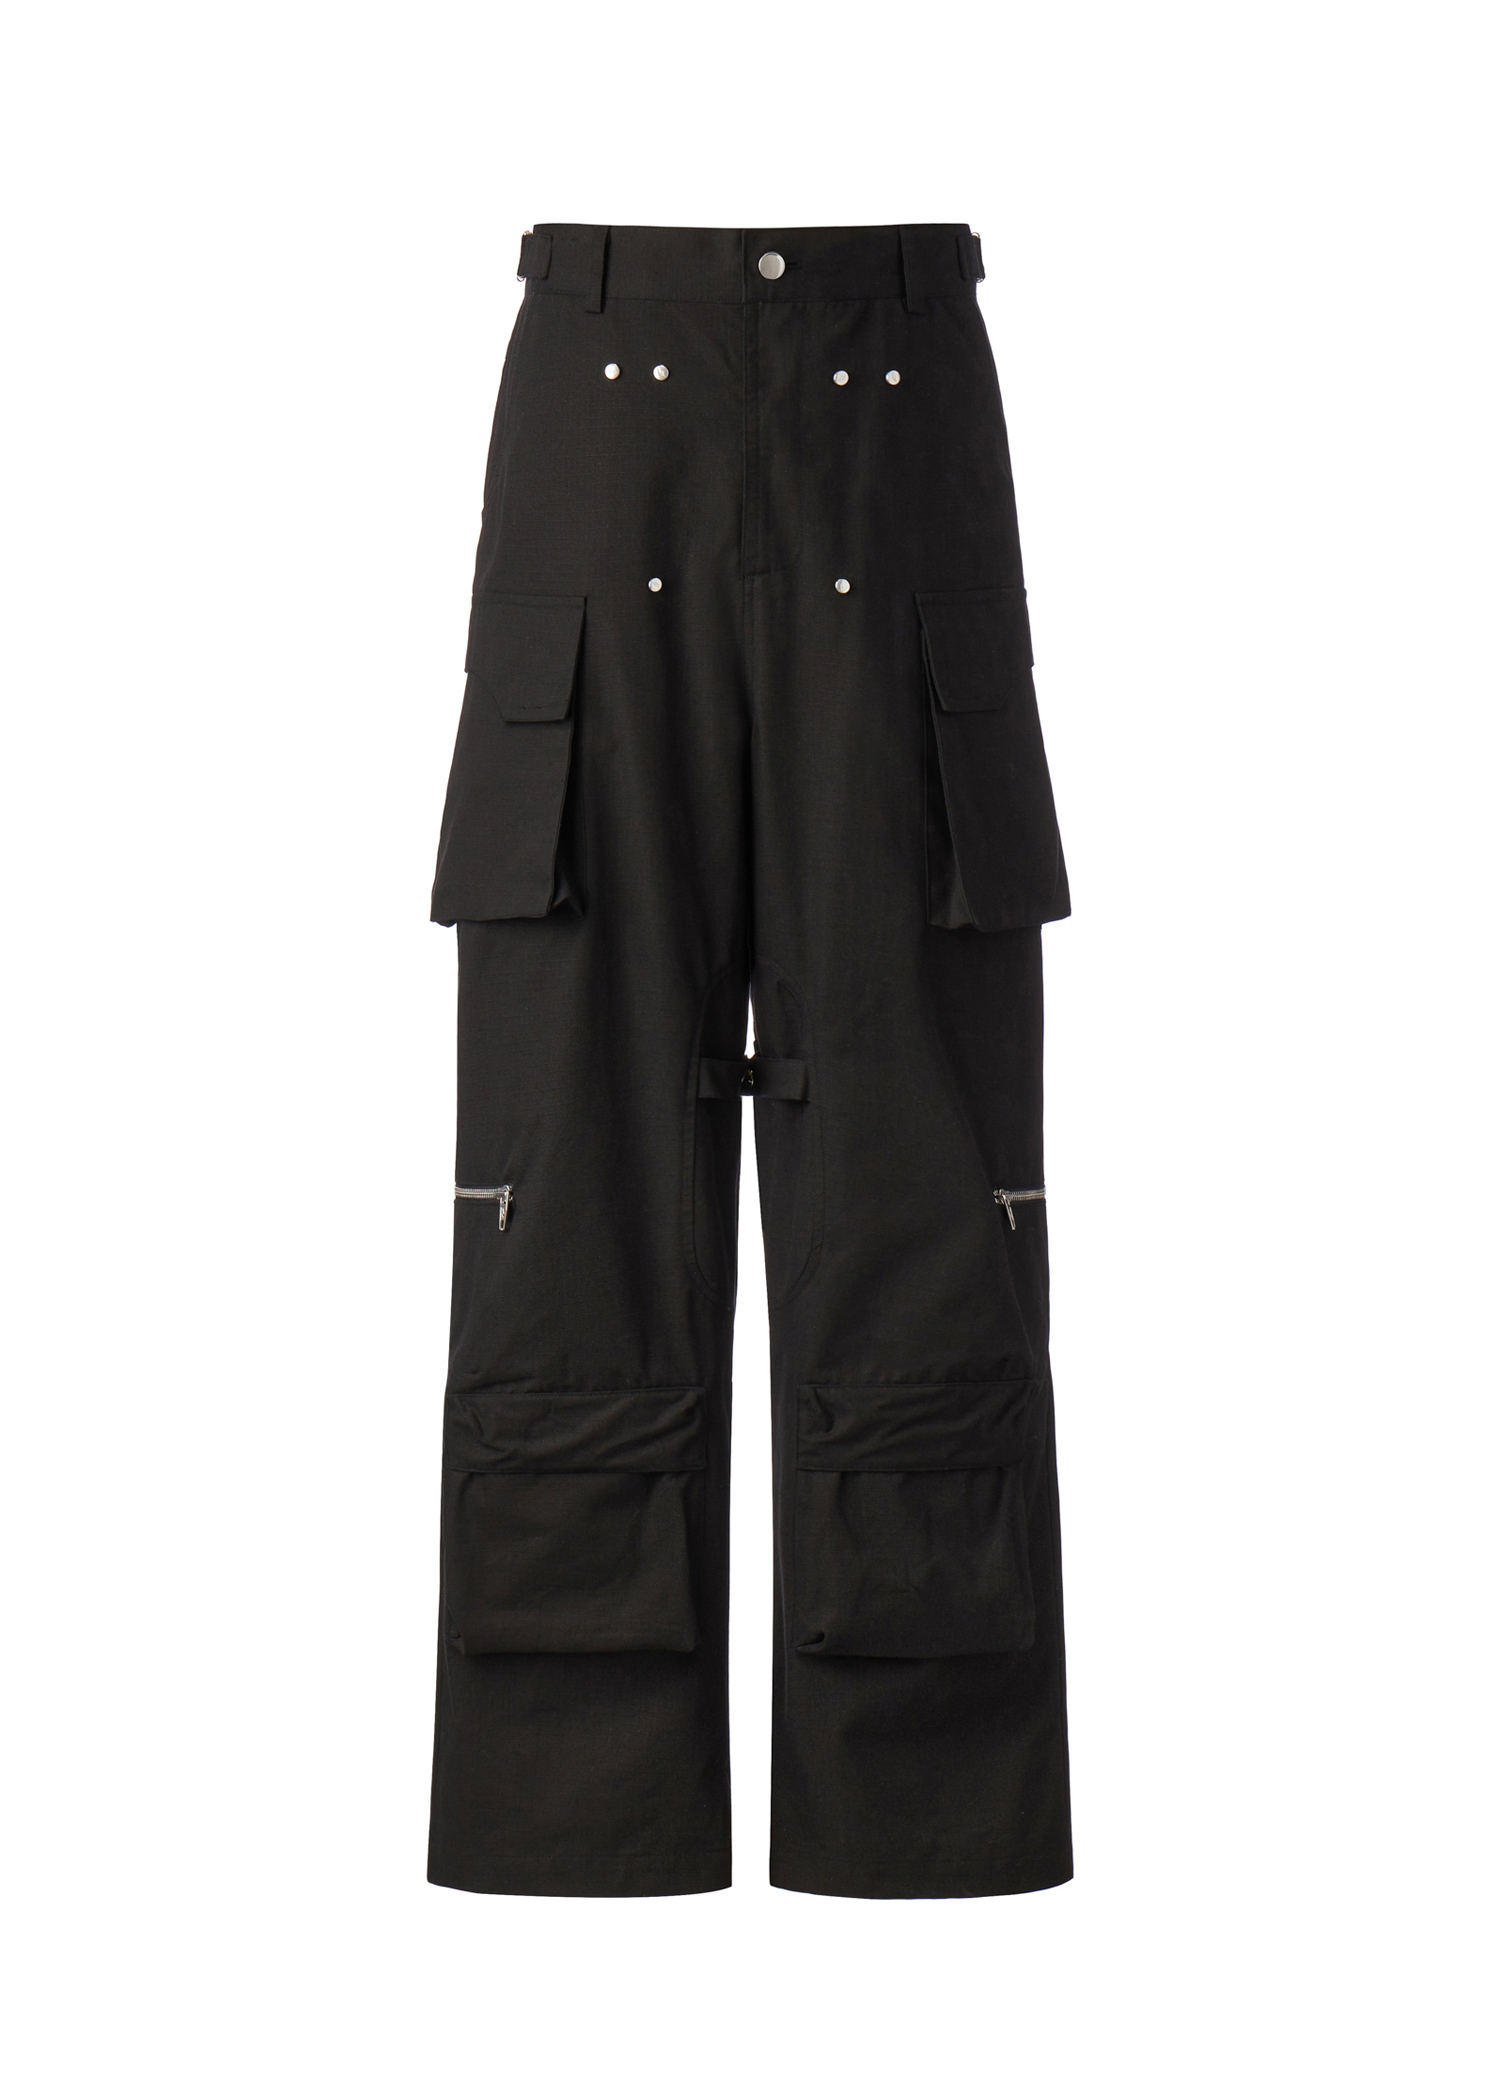 004-23 multi-pocket pants - black